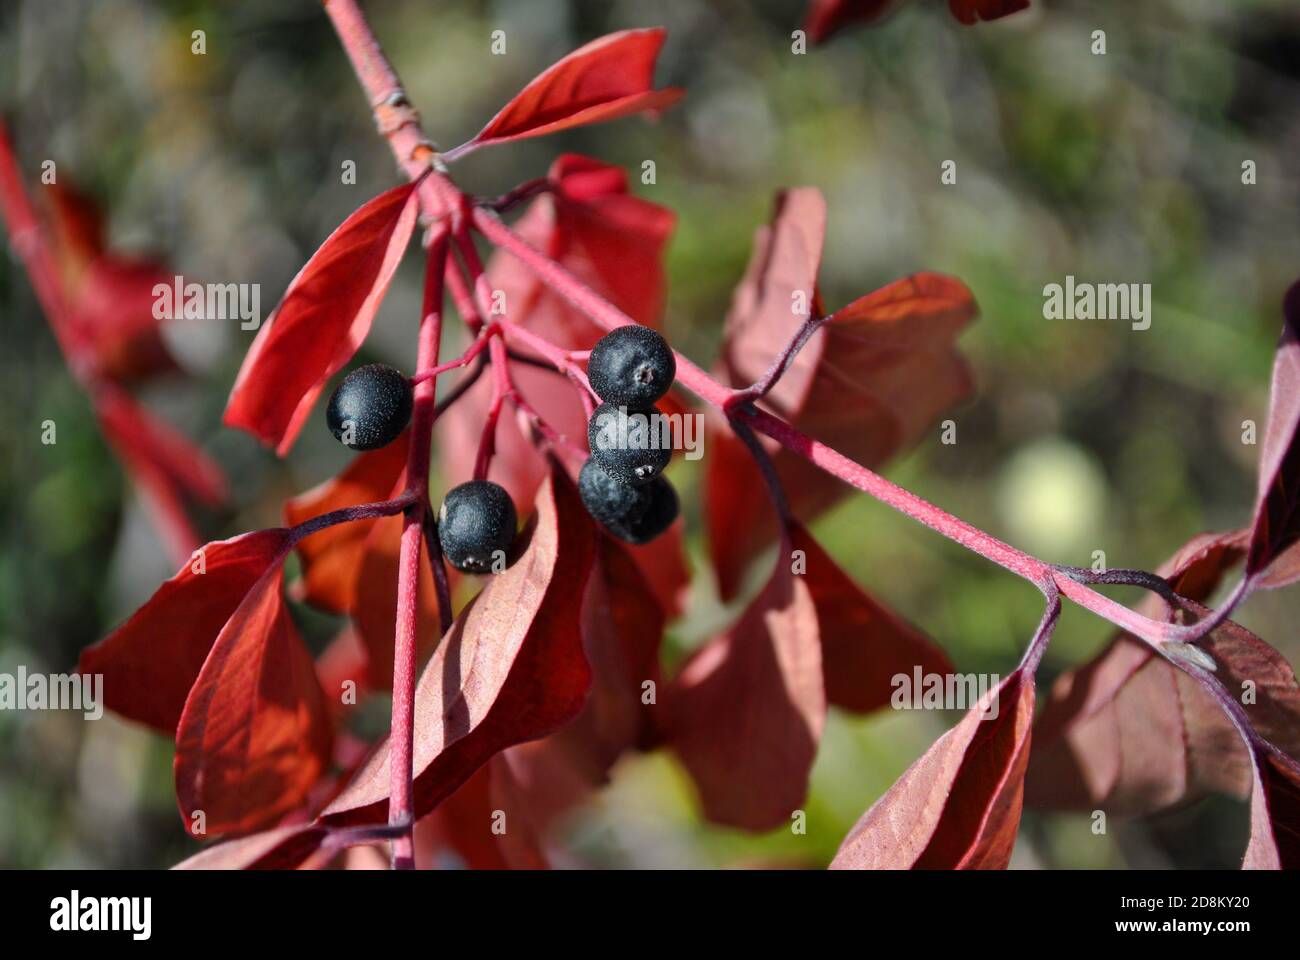 Frangula alnus (alder buckthorn, glossy buckthorn, breaking buckthorn) branch with black berries, soft blurry background Stock Photo